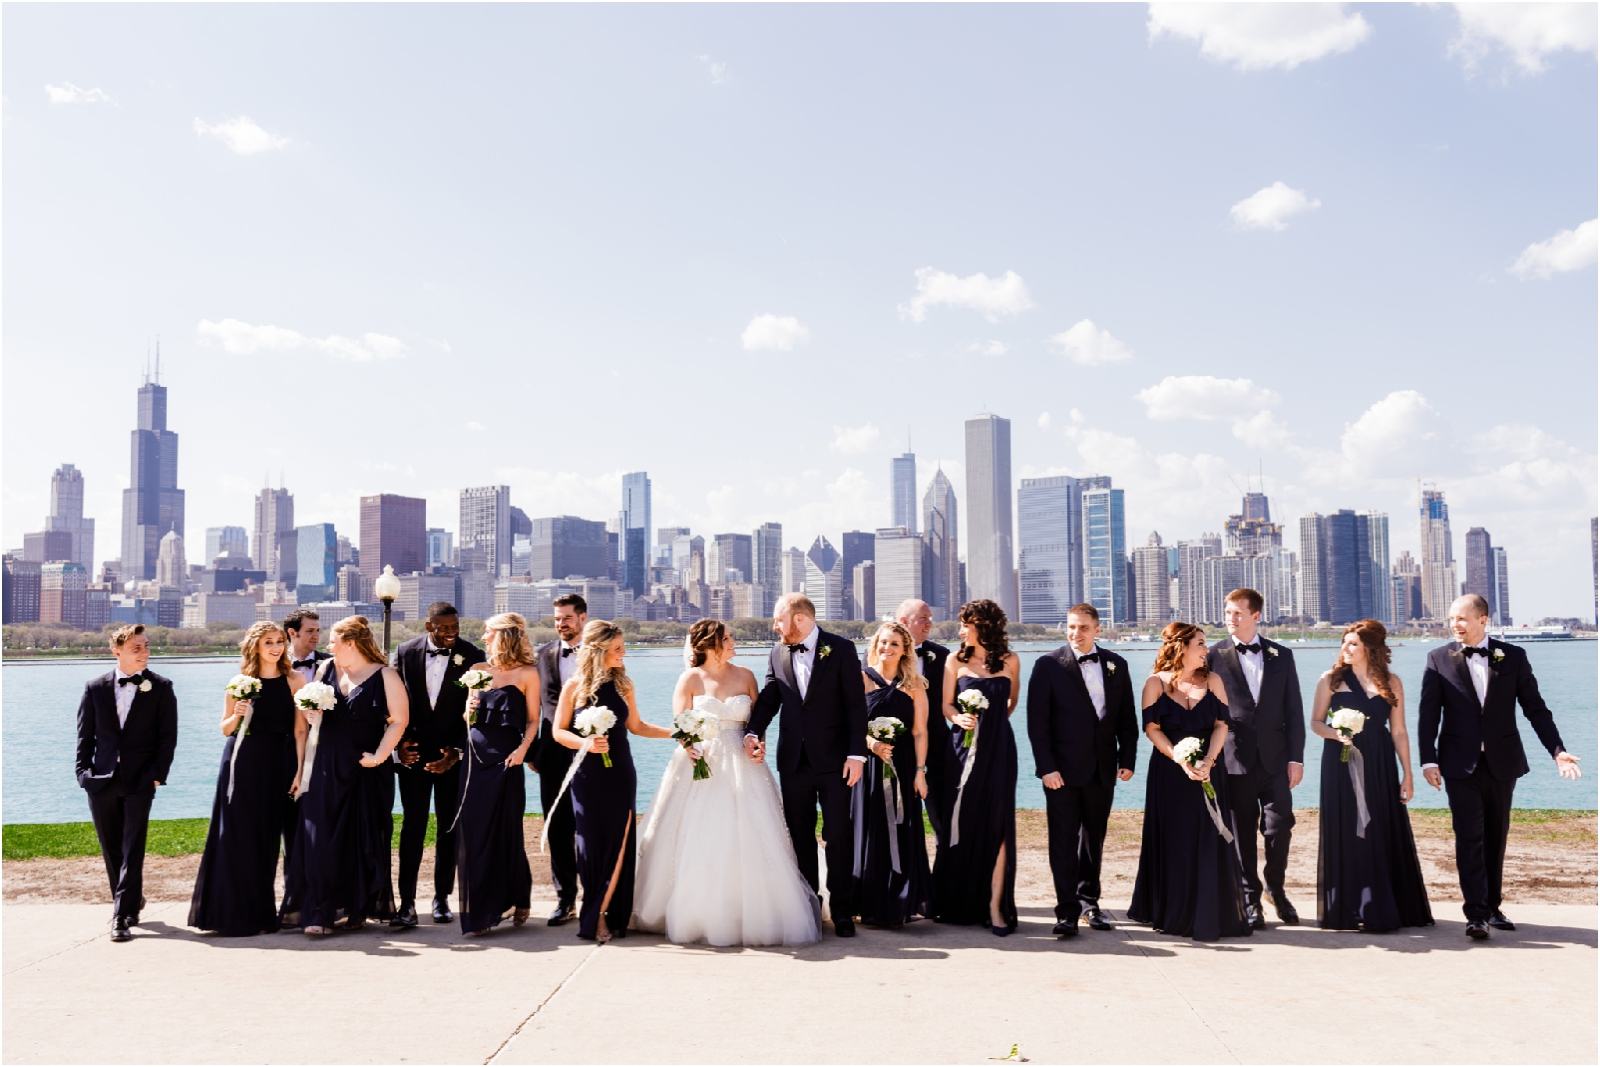 Adler Planetarium Wedding Pictures | Chicago Wedding Photographer 